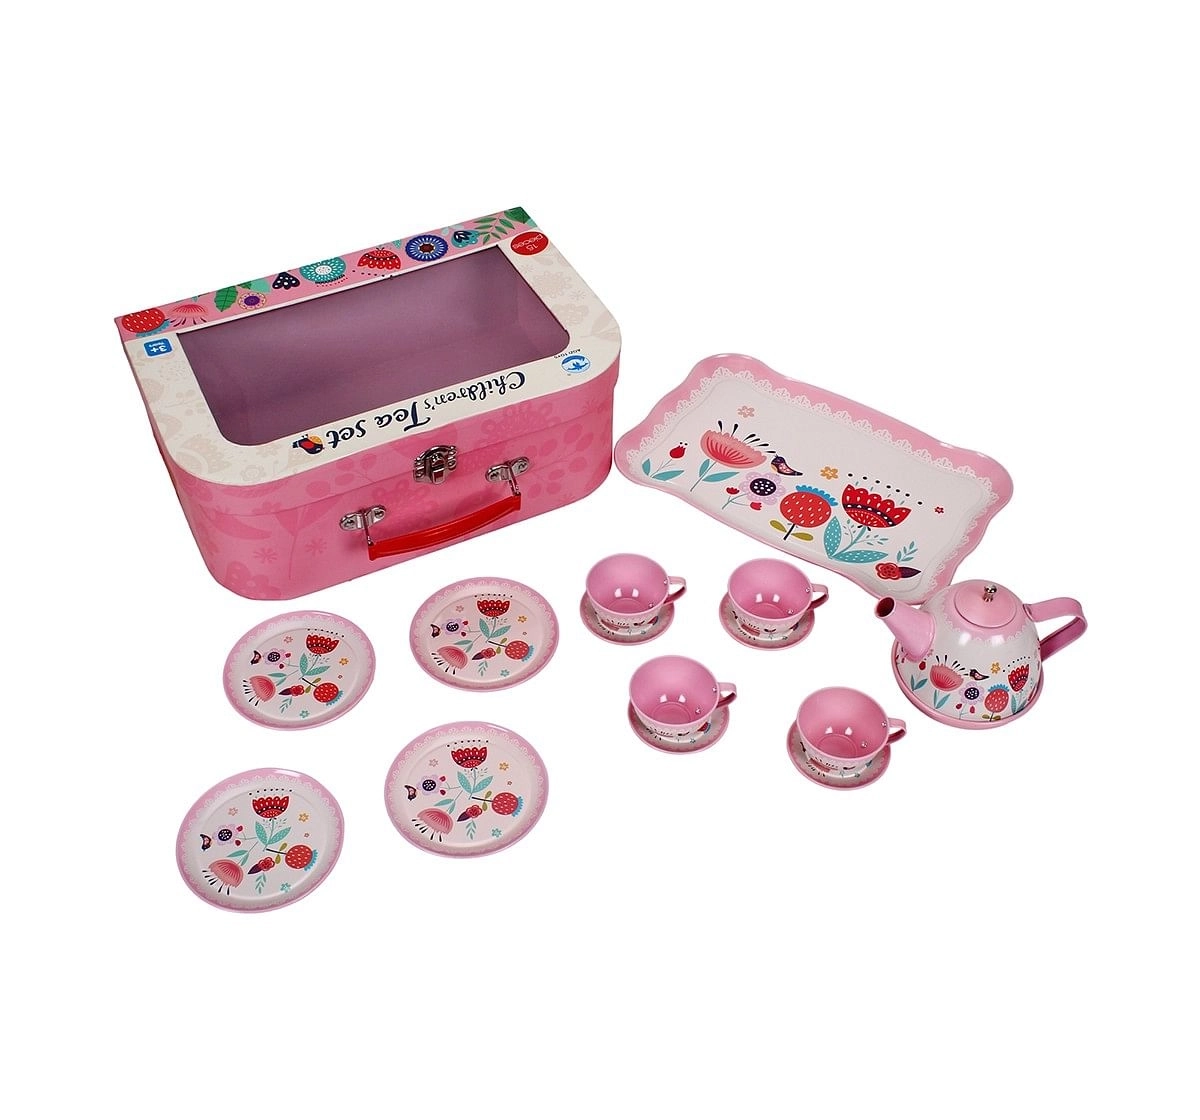 Comdaq Children'S Square 15 Pcs Tea Set for Kids age 3Y+ (Pink)